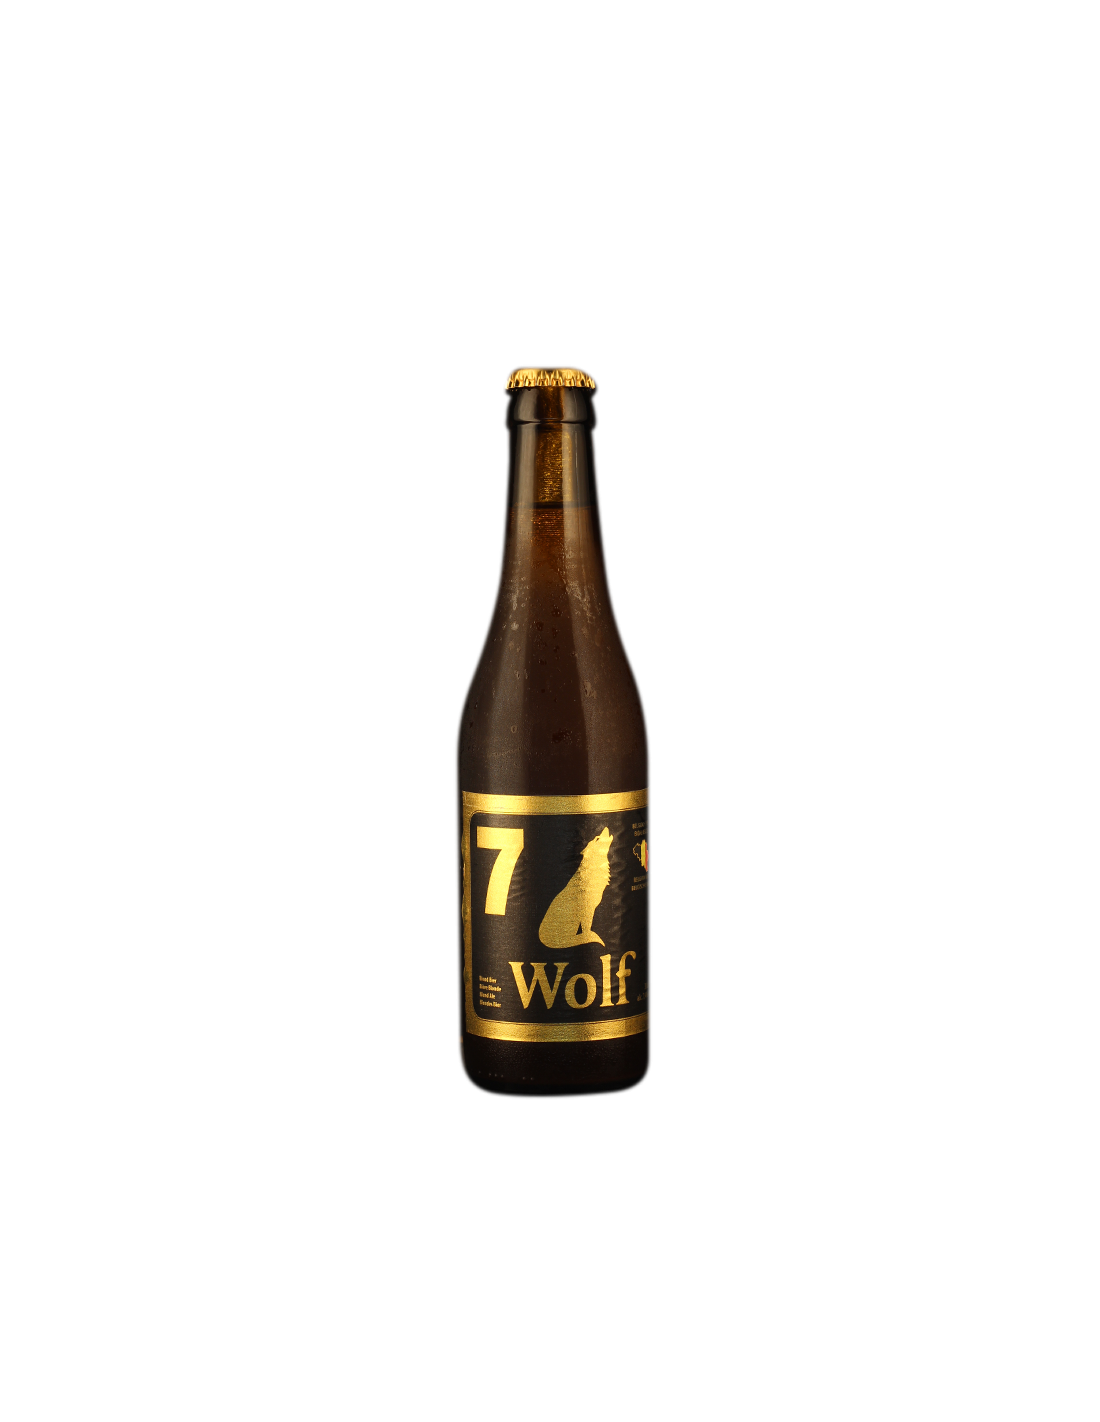 Bere blonda Wolf, 7.4% alc., 0.33L, Belgia alcooldiscount.ro